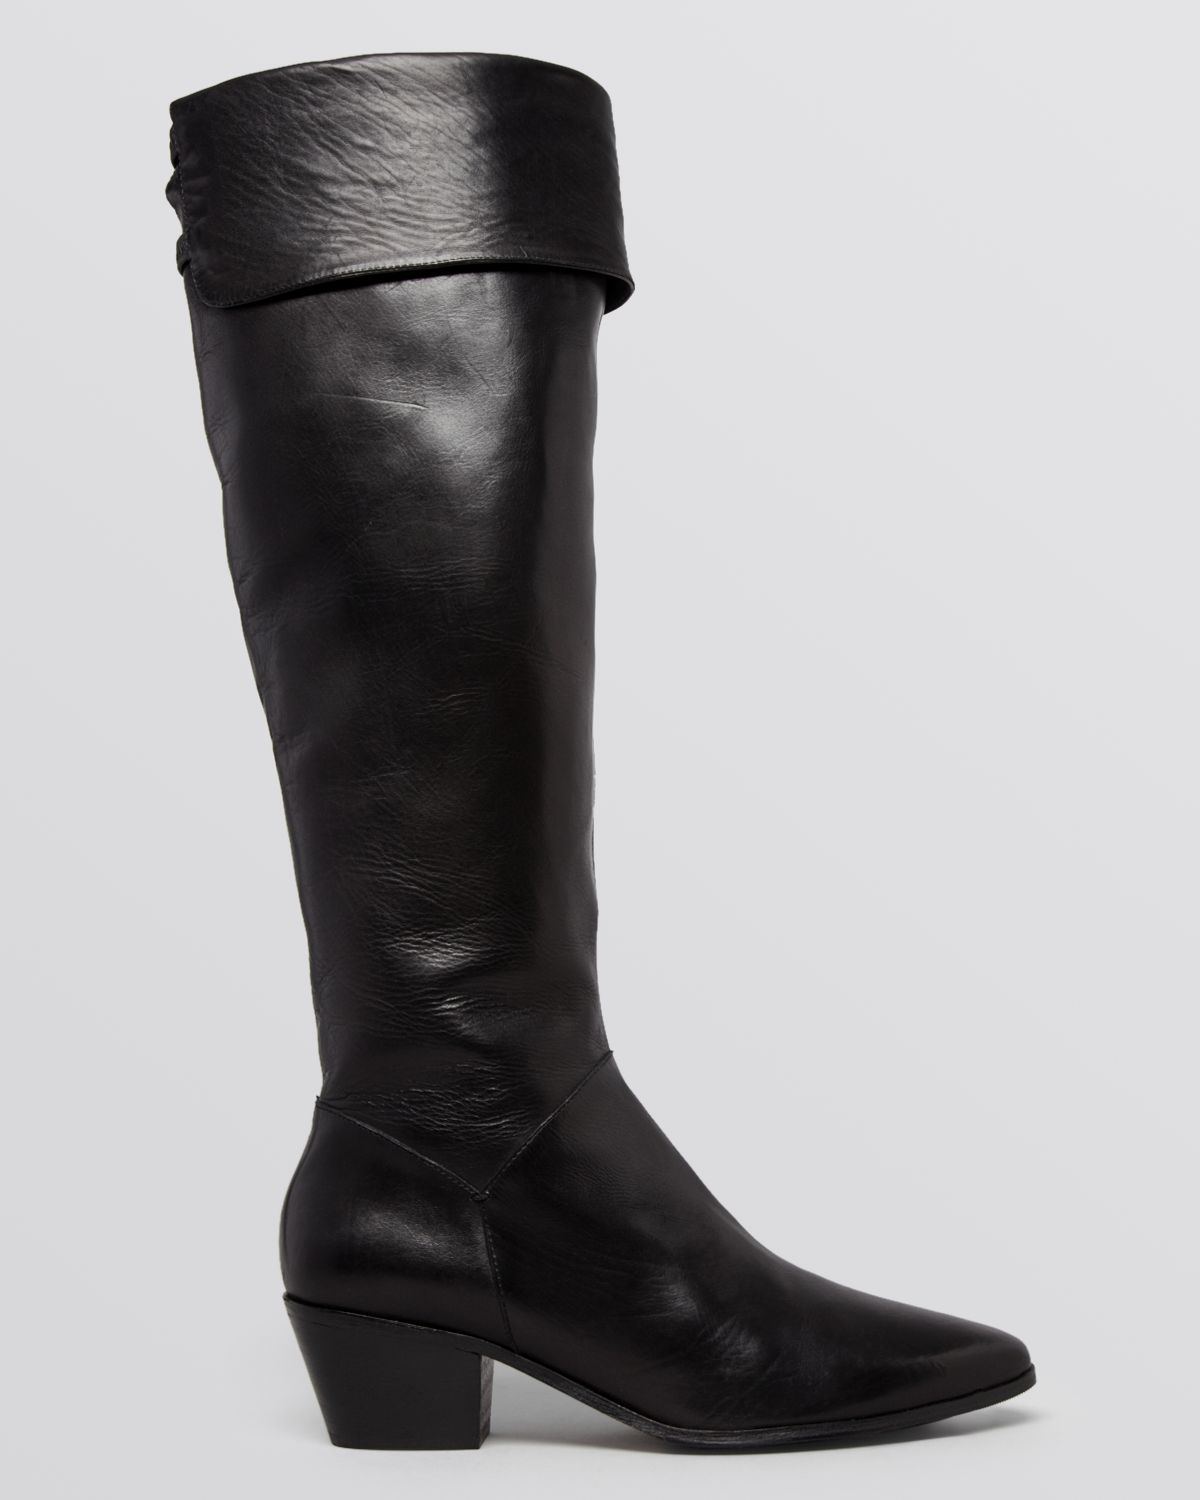 Lyst - Elie Tahari Over The Knee Boots Pompeii in Black